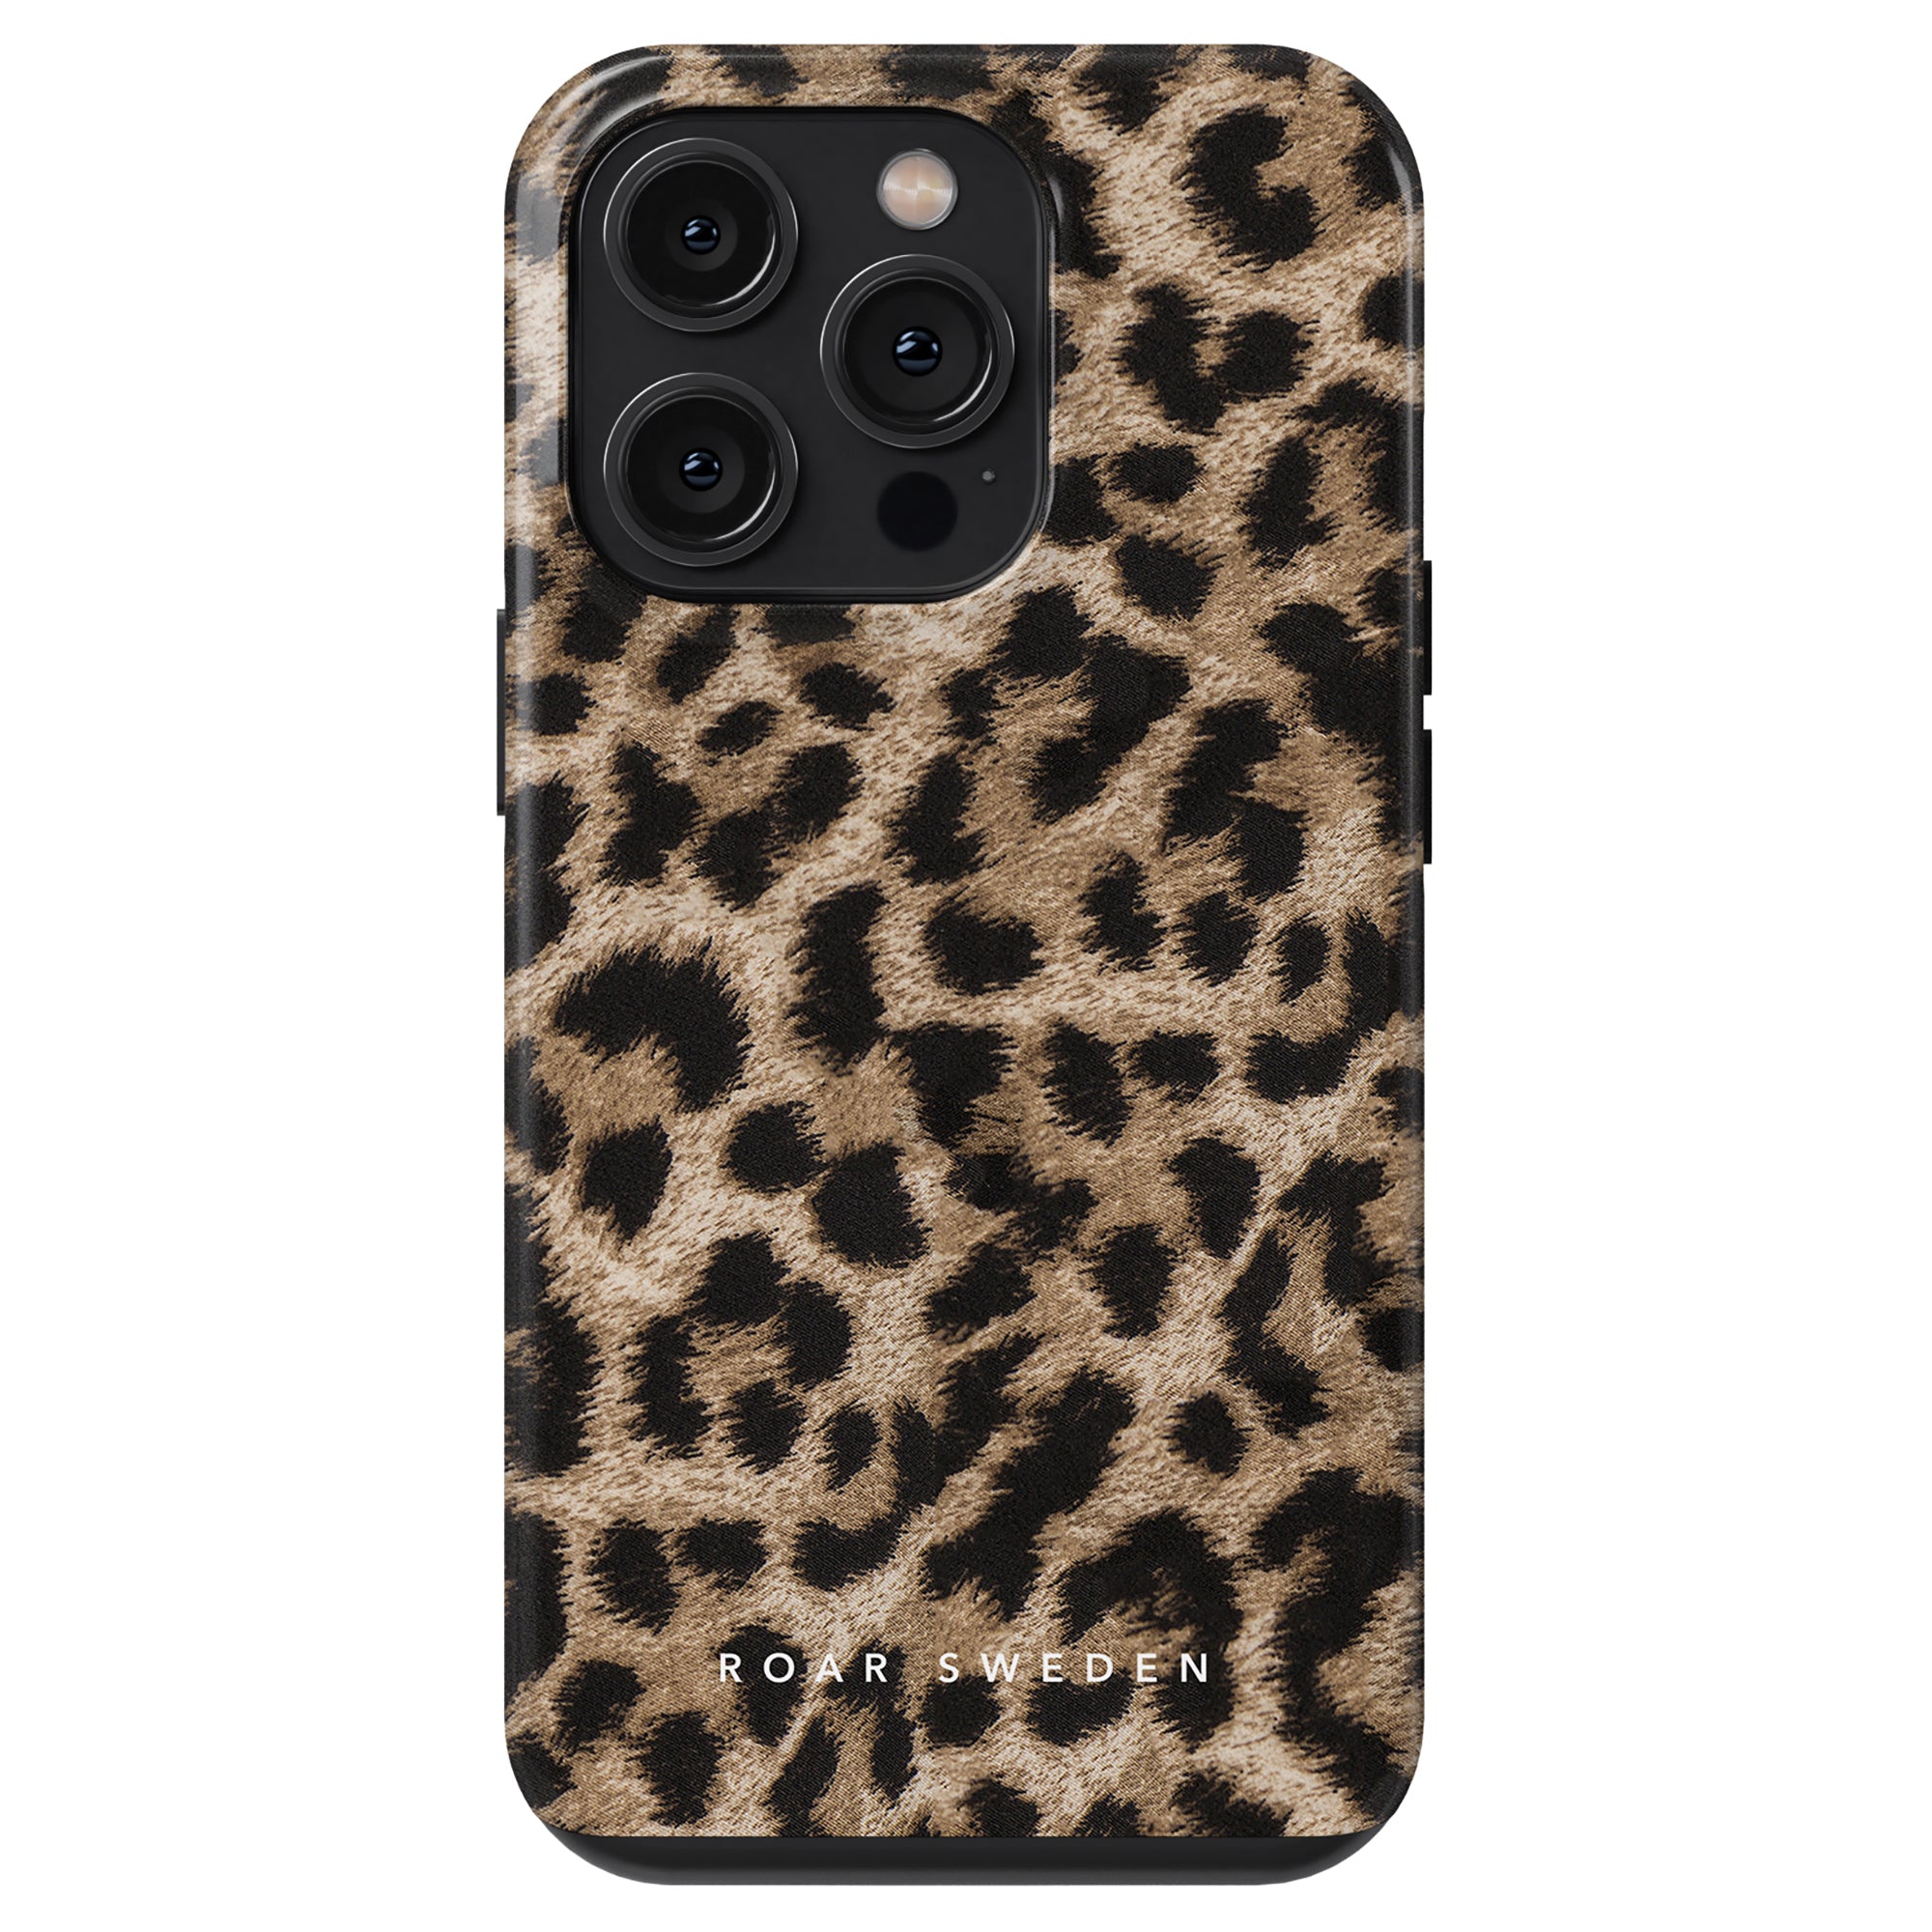 The Leopard - Tufft fodral för iPhone 11 Pro Max-smarttelefonen.